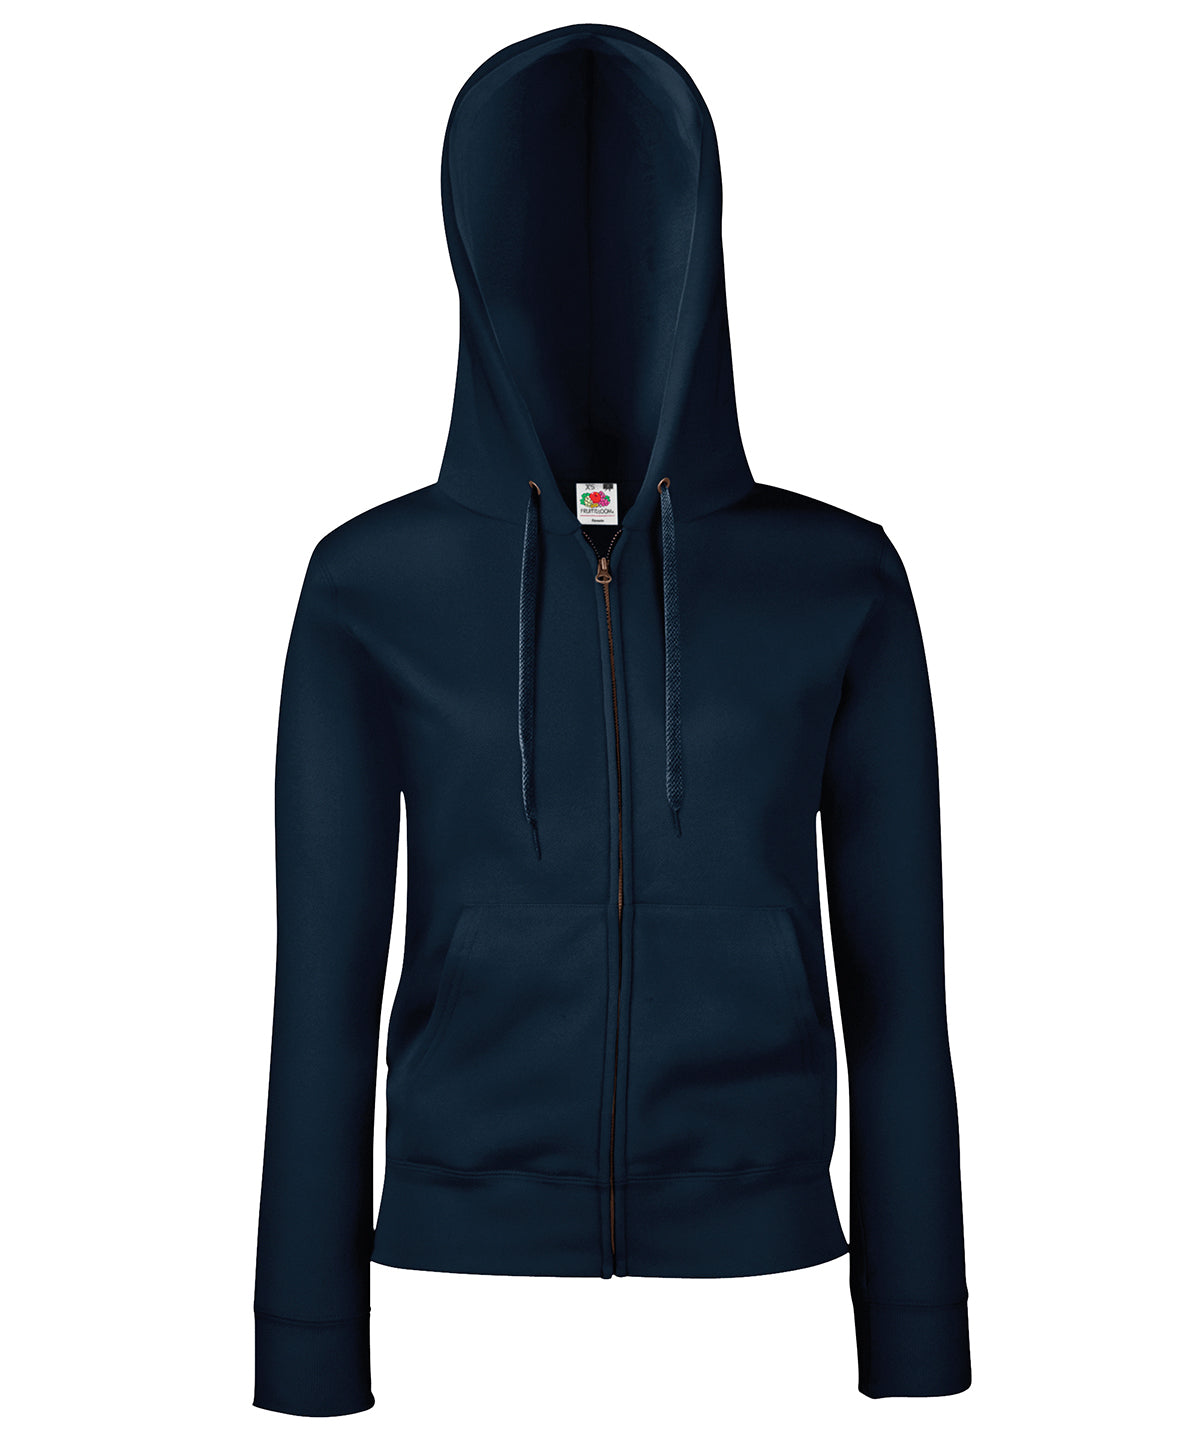 Women's premium 70/30 hooded sweatshirt jacket